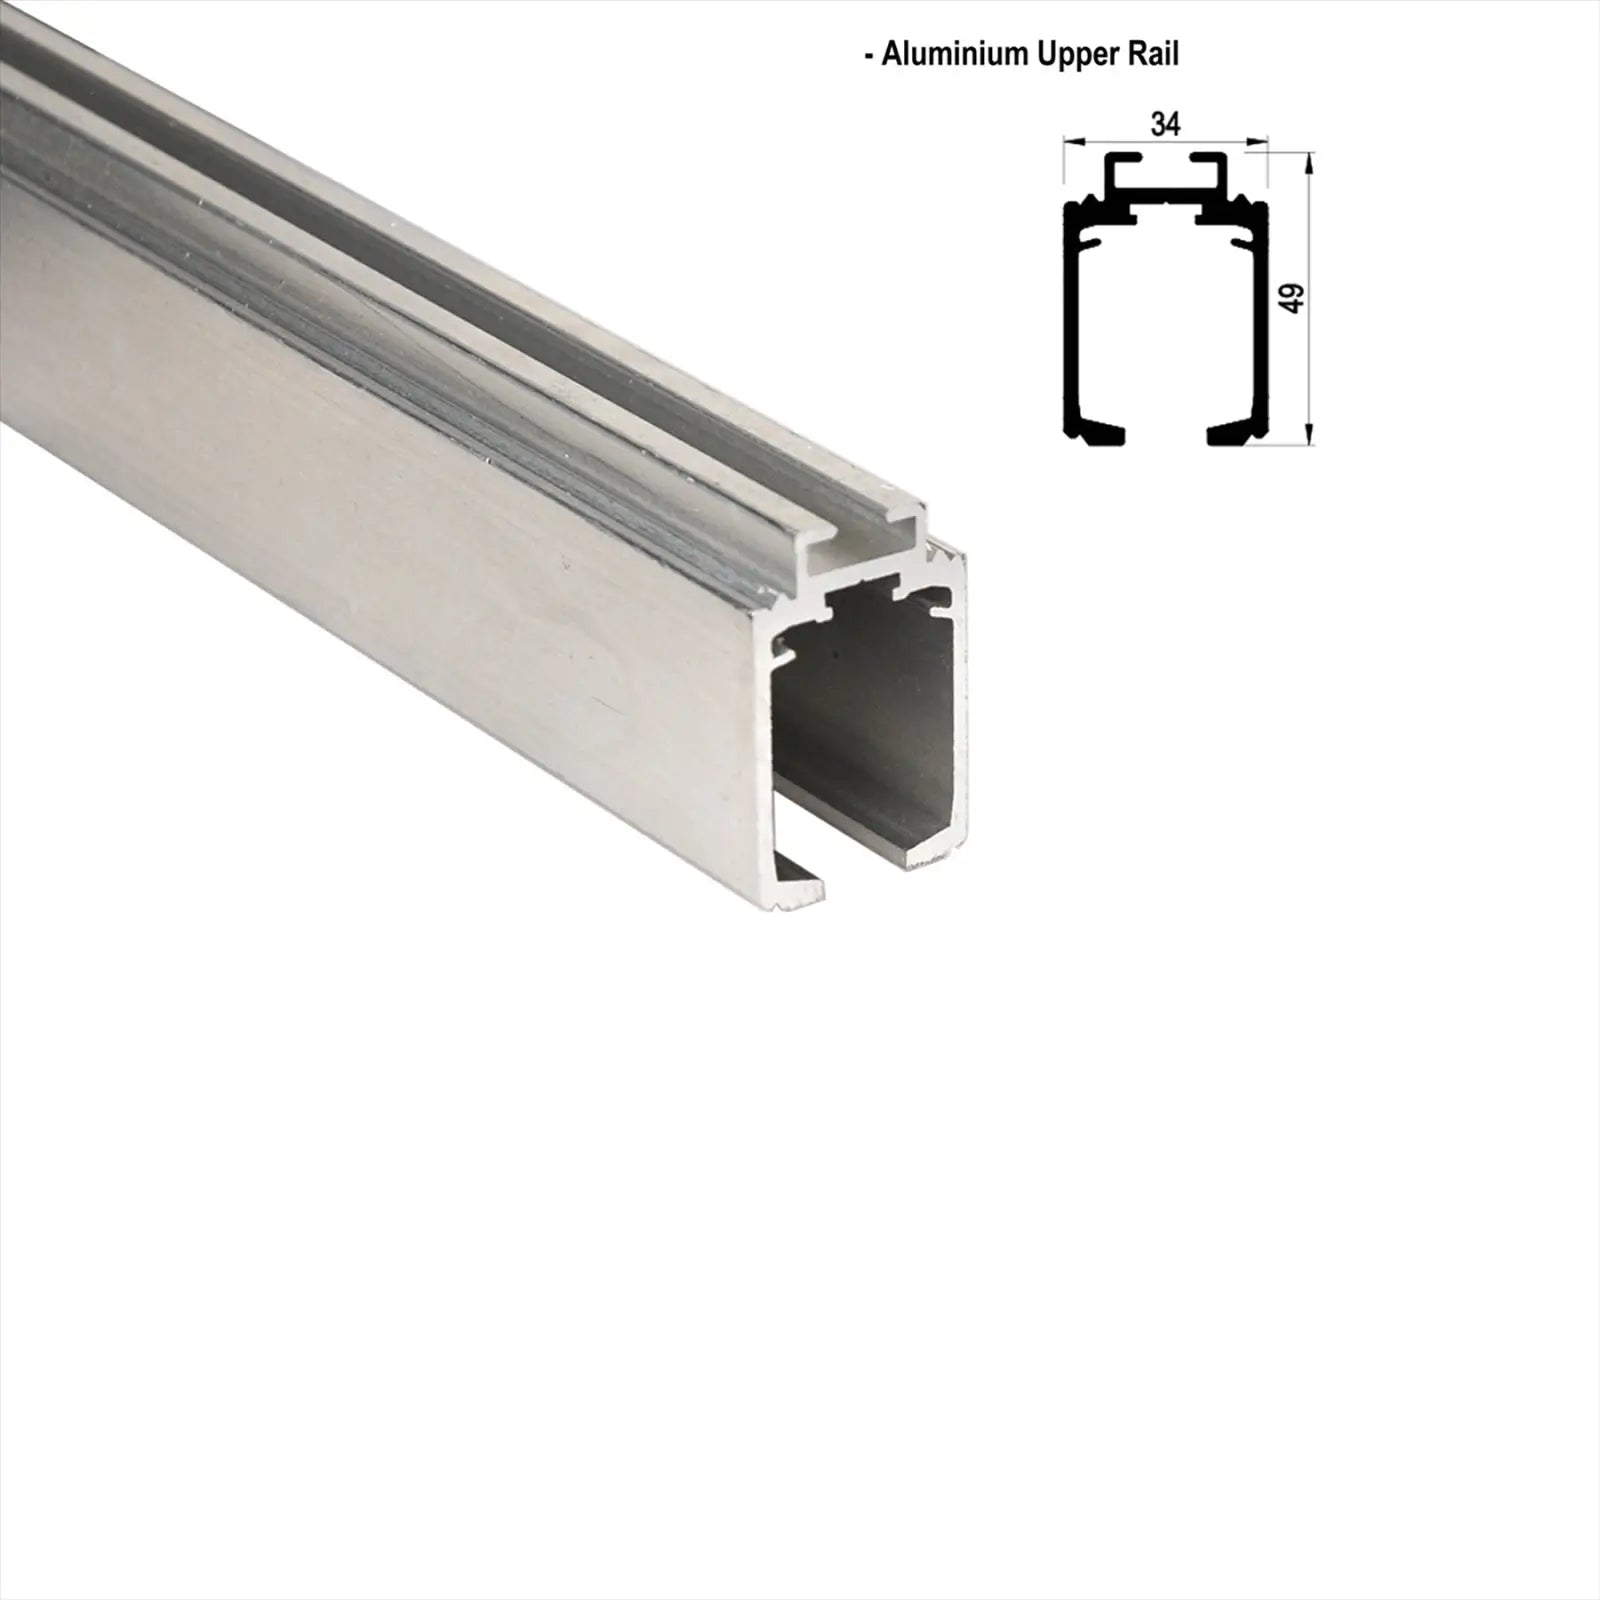 G-Slide Top Hung Glass Internal Sliding Door Kit - 3000mm Track - Decor And Decor